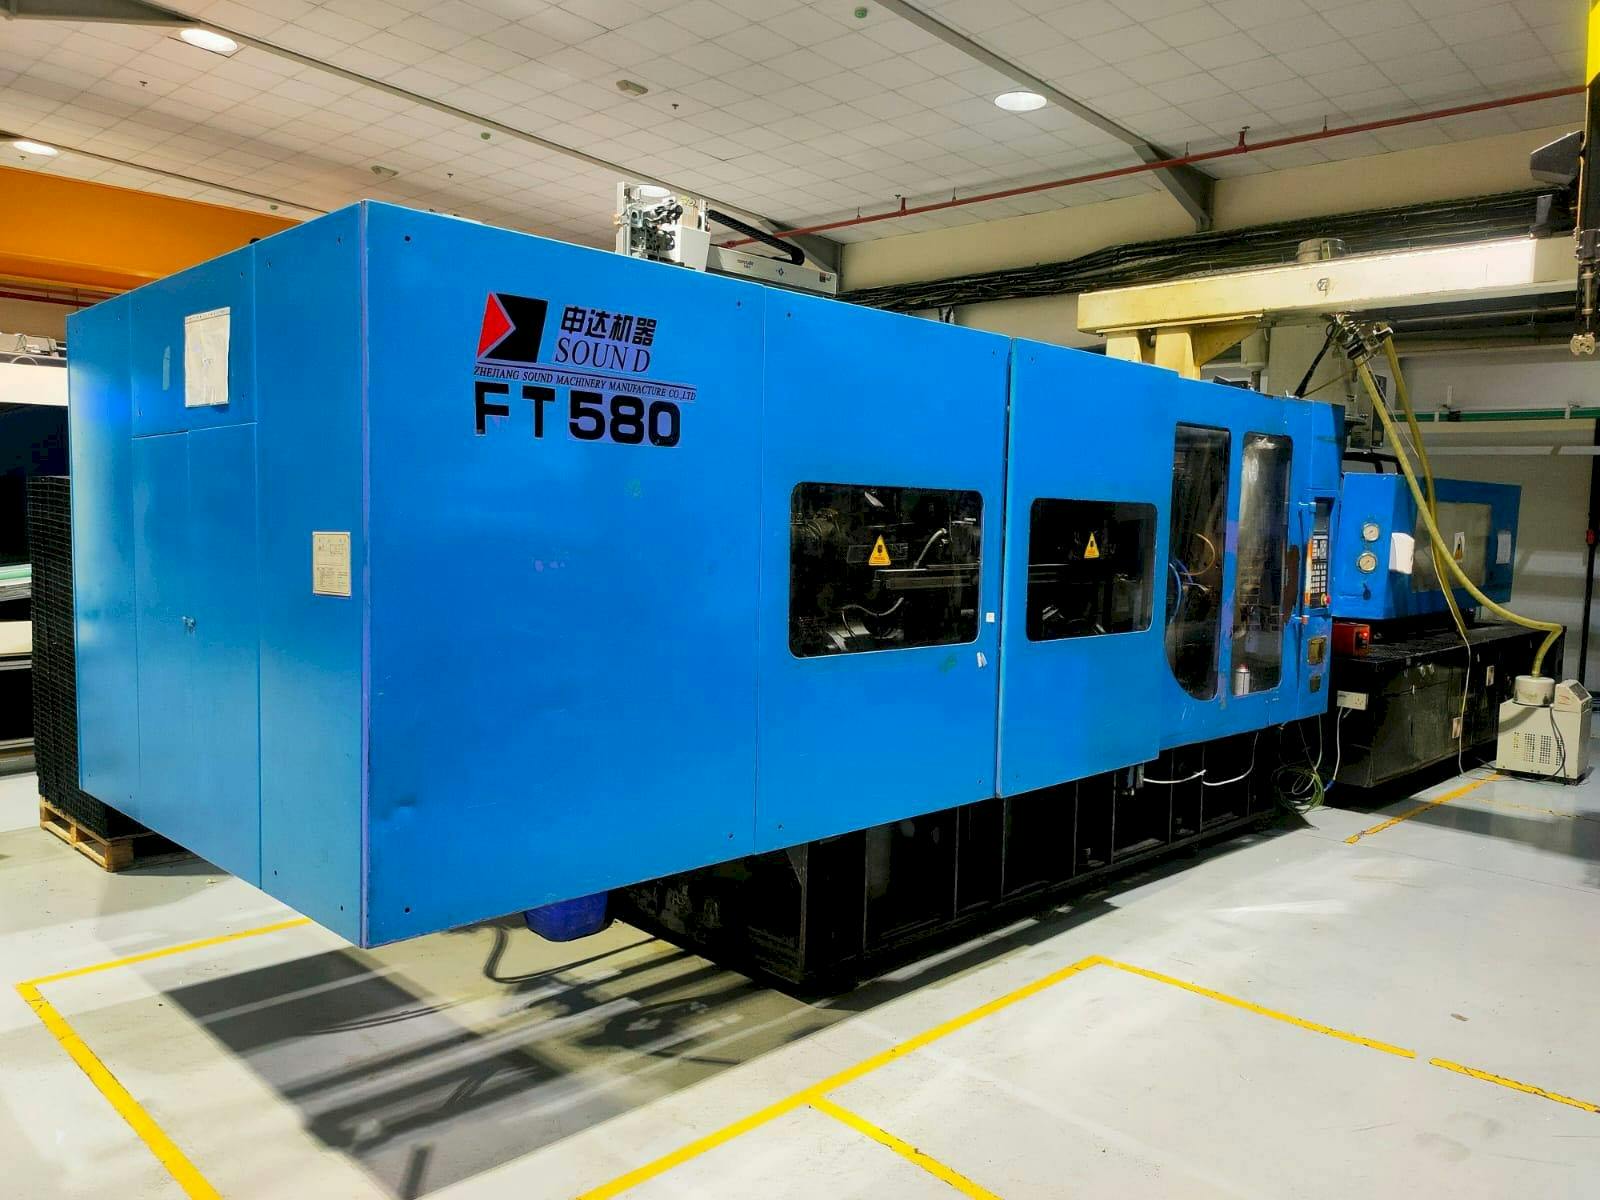 Vooraanzicht  van Zhejiang Sound Machinery Manufacture FT 580  machine